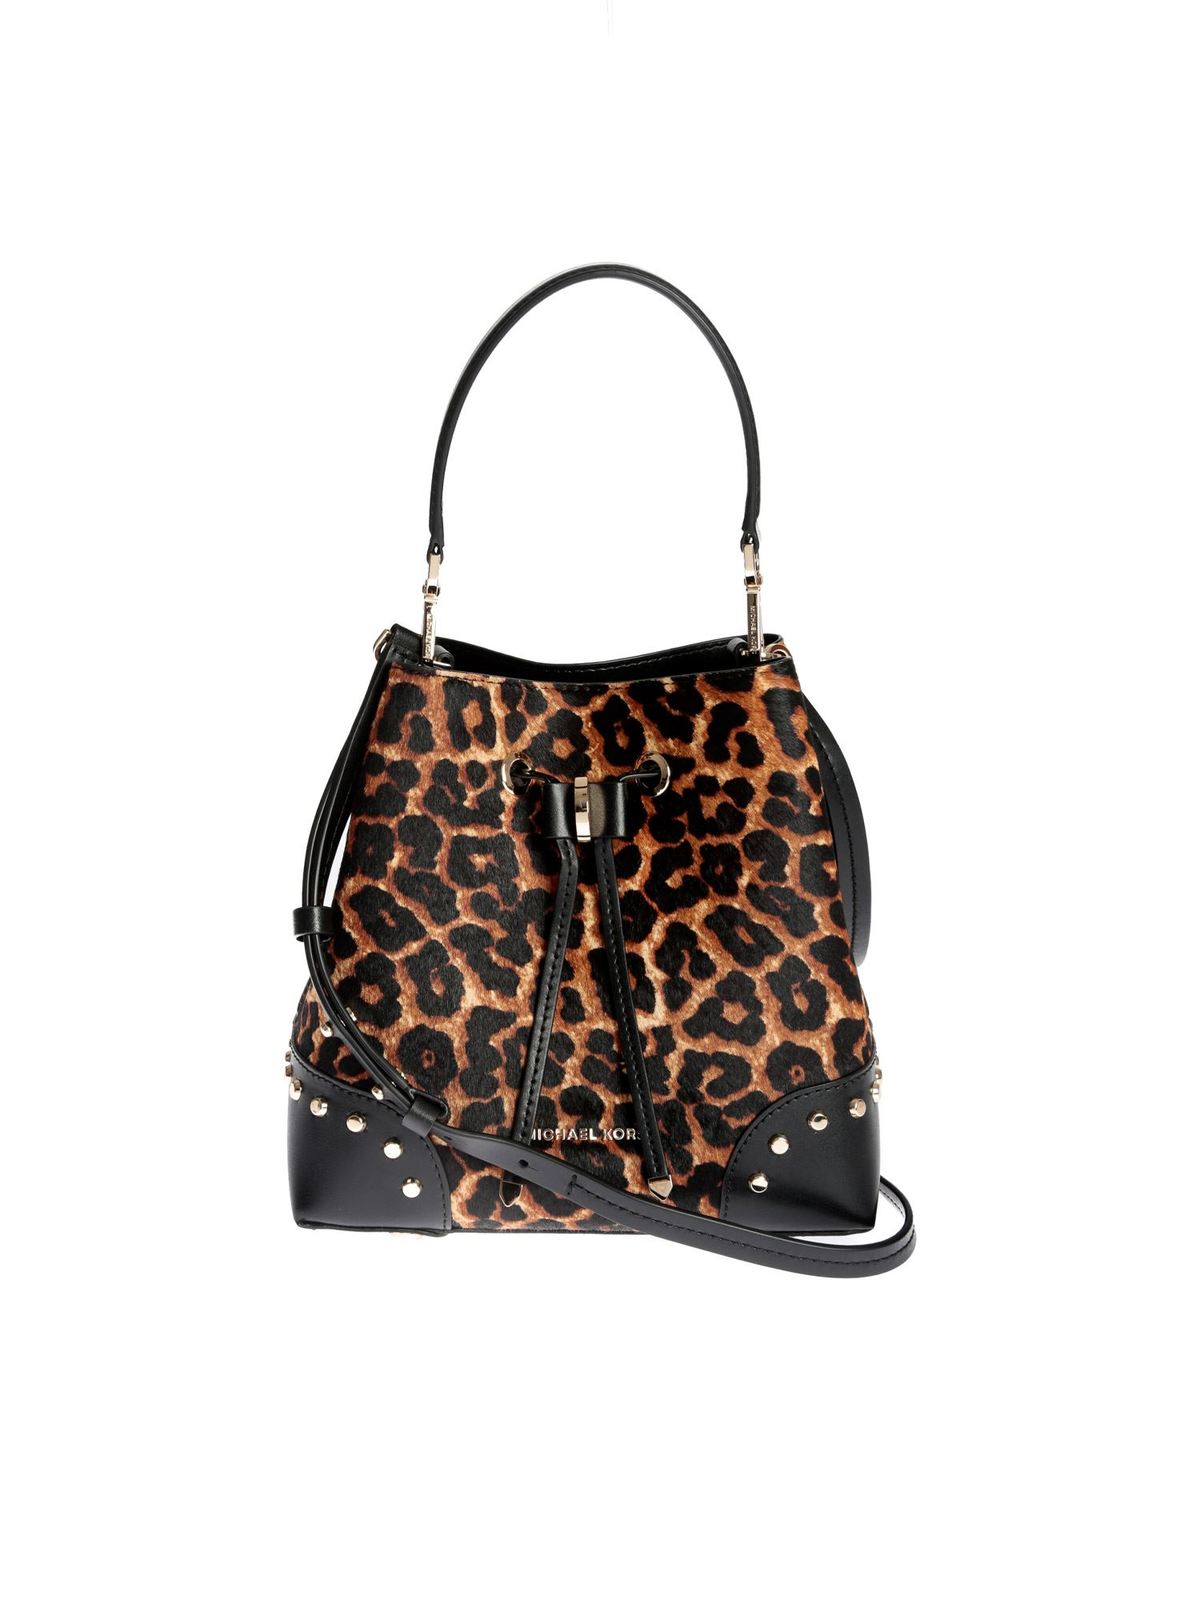 Michael Kors Animal Print Bags & Handbags for Women | eBay